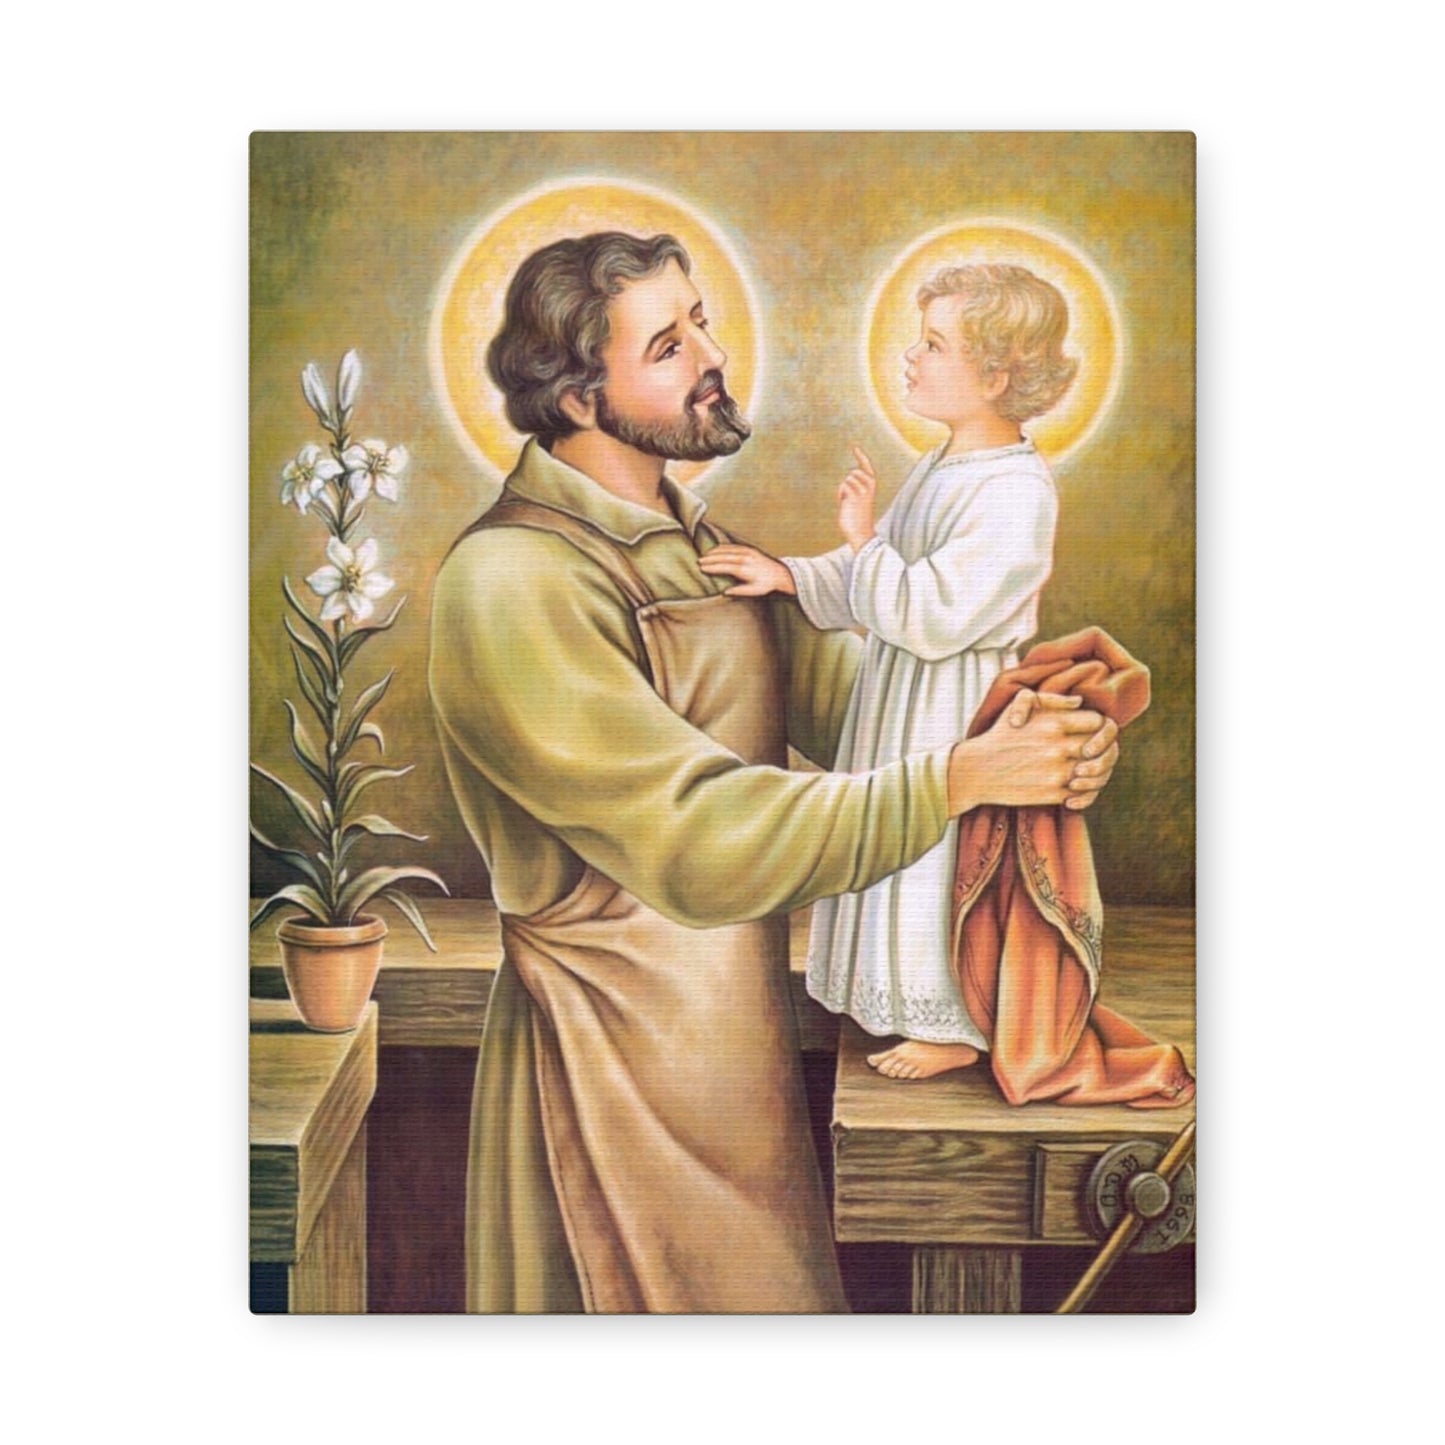 Saint Joseph the Worker Confirmation Gift Canvas, Catholic Wallart home decor, Wall Art gift home prayer altar, Child Jesus Foster Father